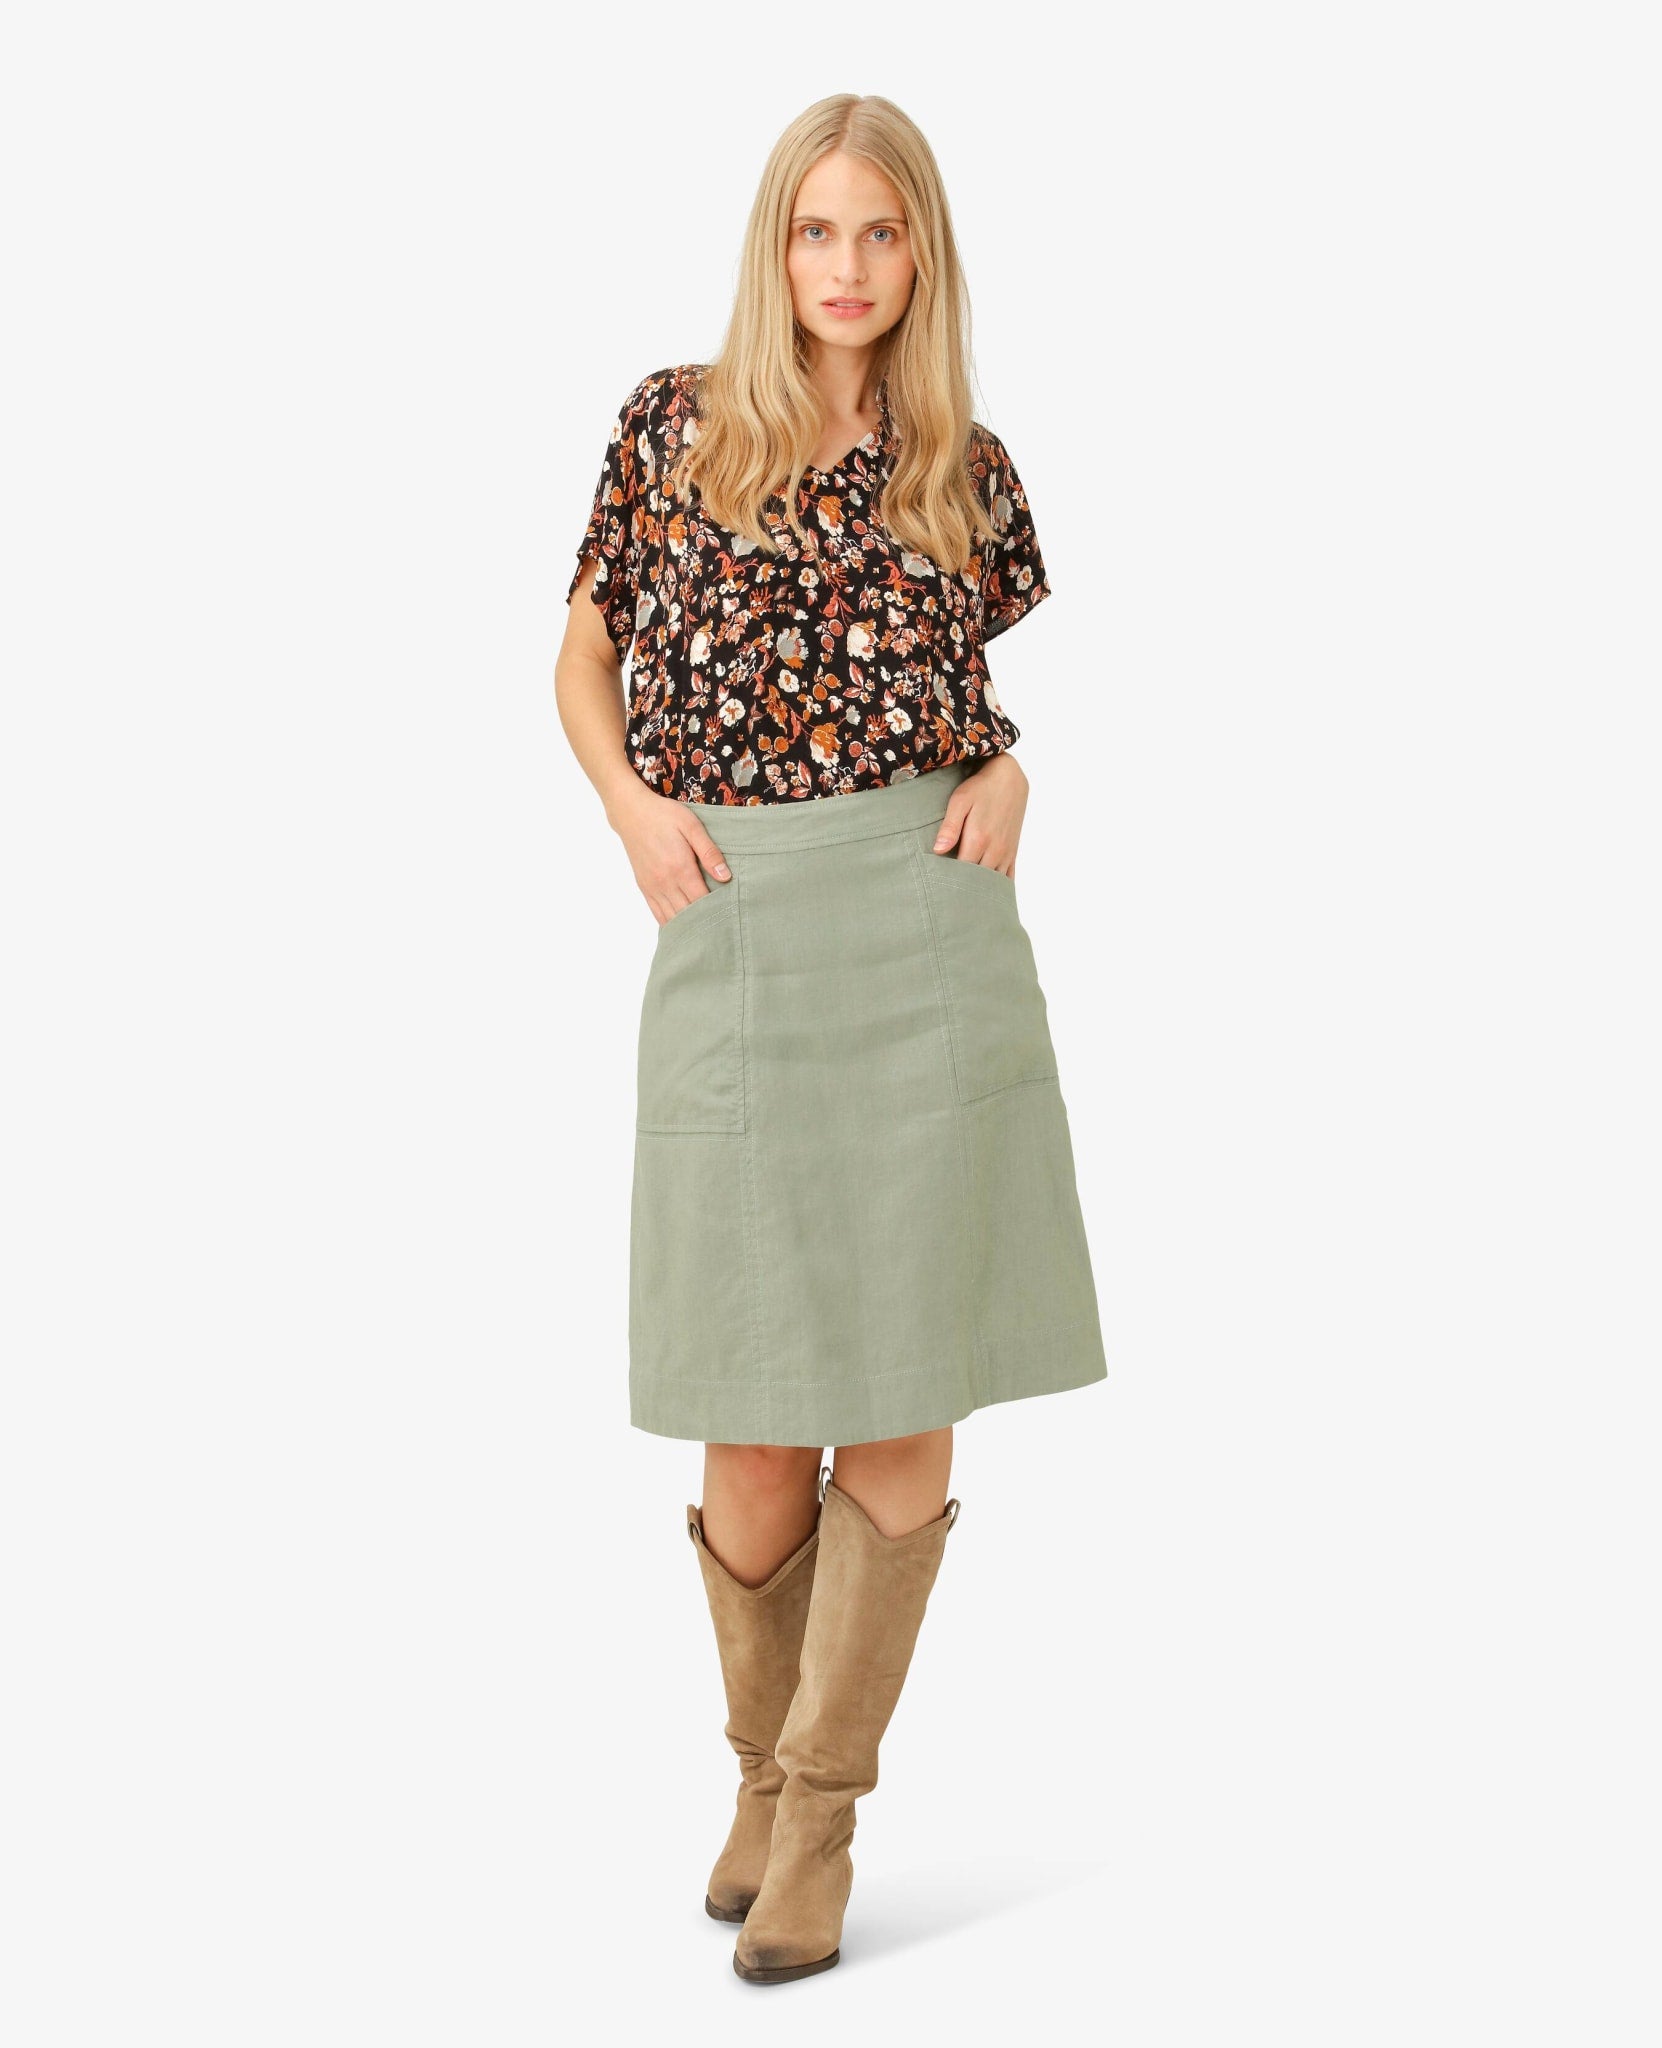 Jessica London Womens Plus Size Chino Skirt 28 W  New Khaki  Target